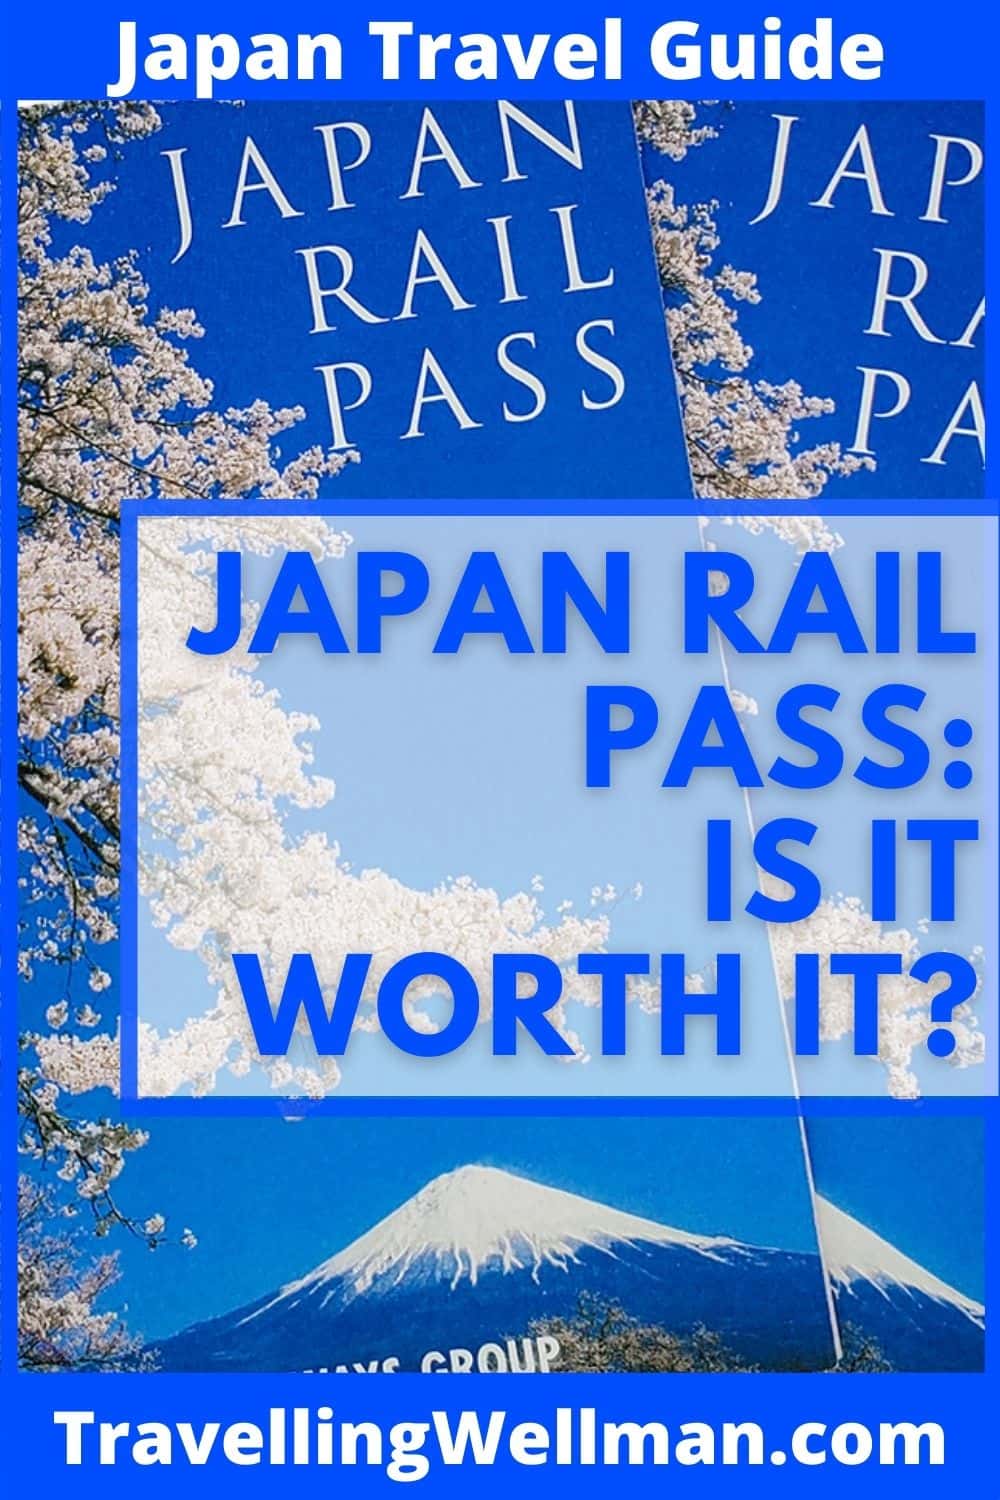 Japan Rail Pass Worth It